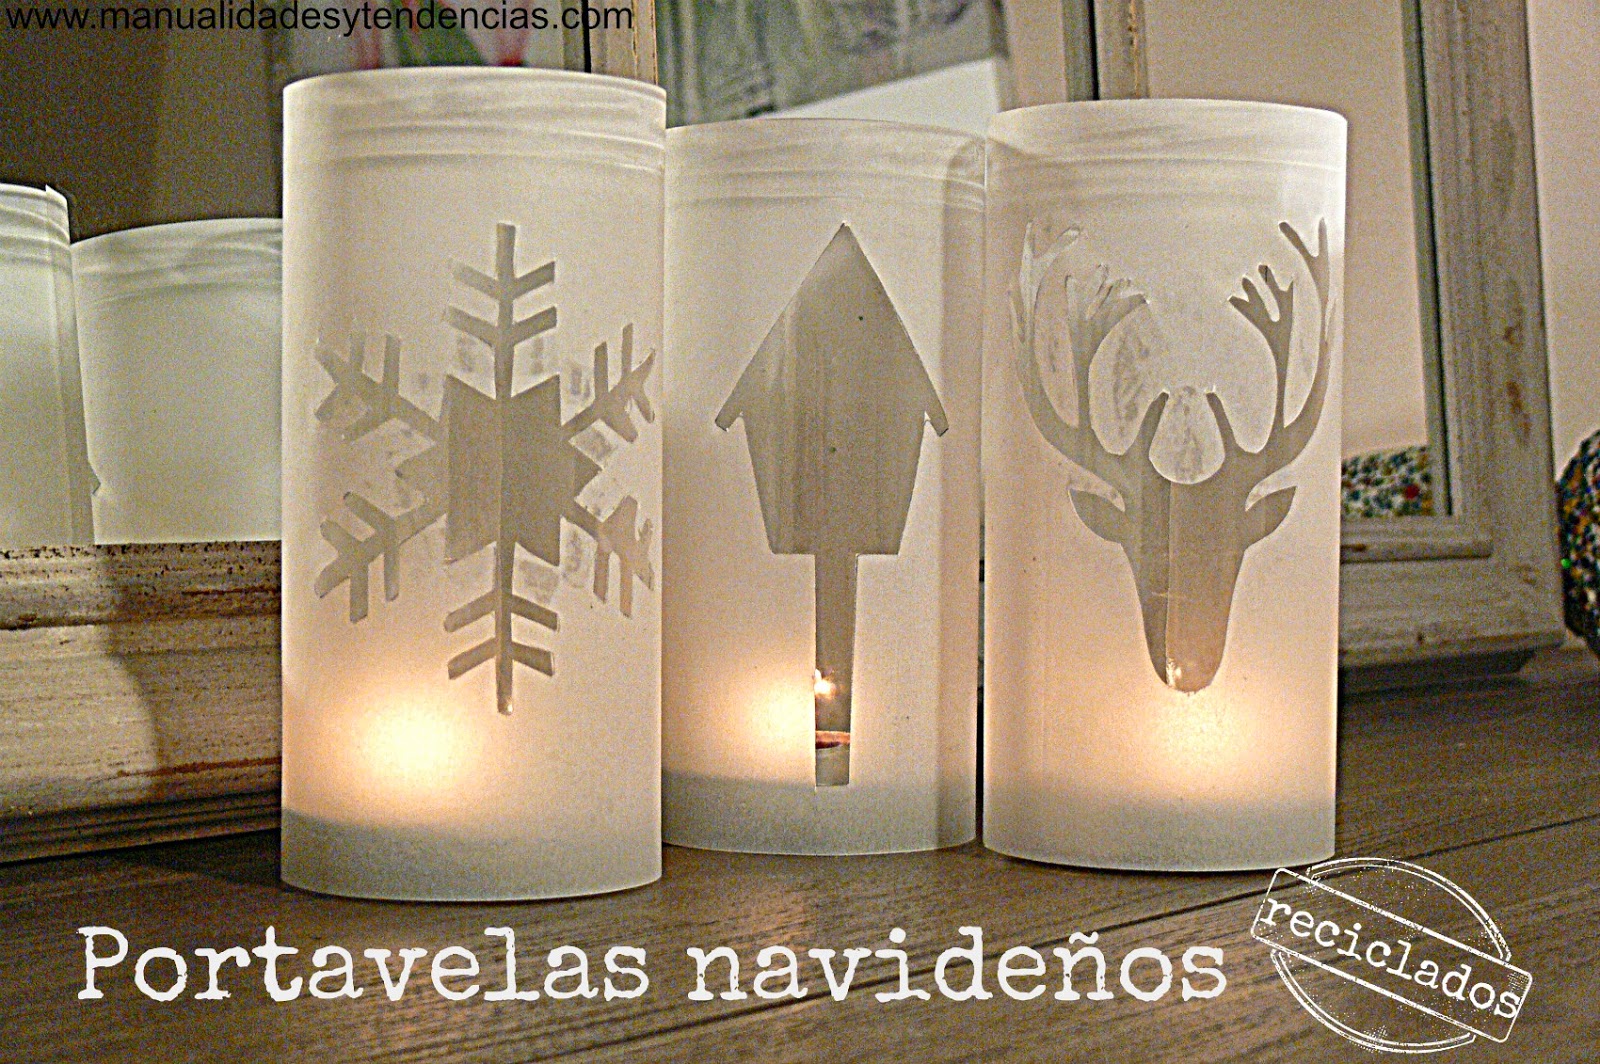 Reciclaje: portavelas navideños / Recycled Christmas candle holder